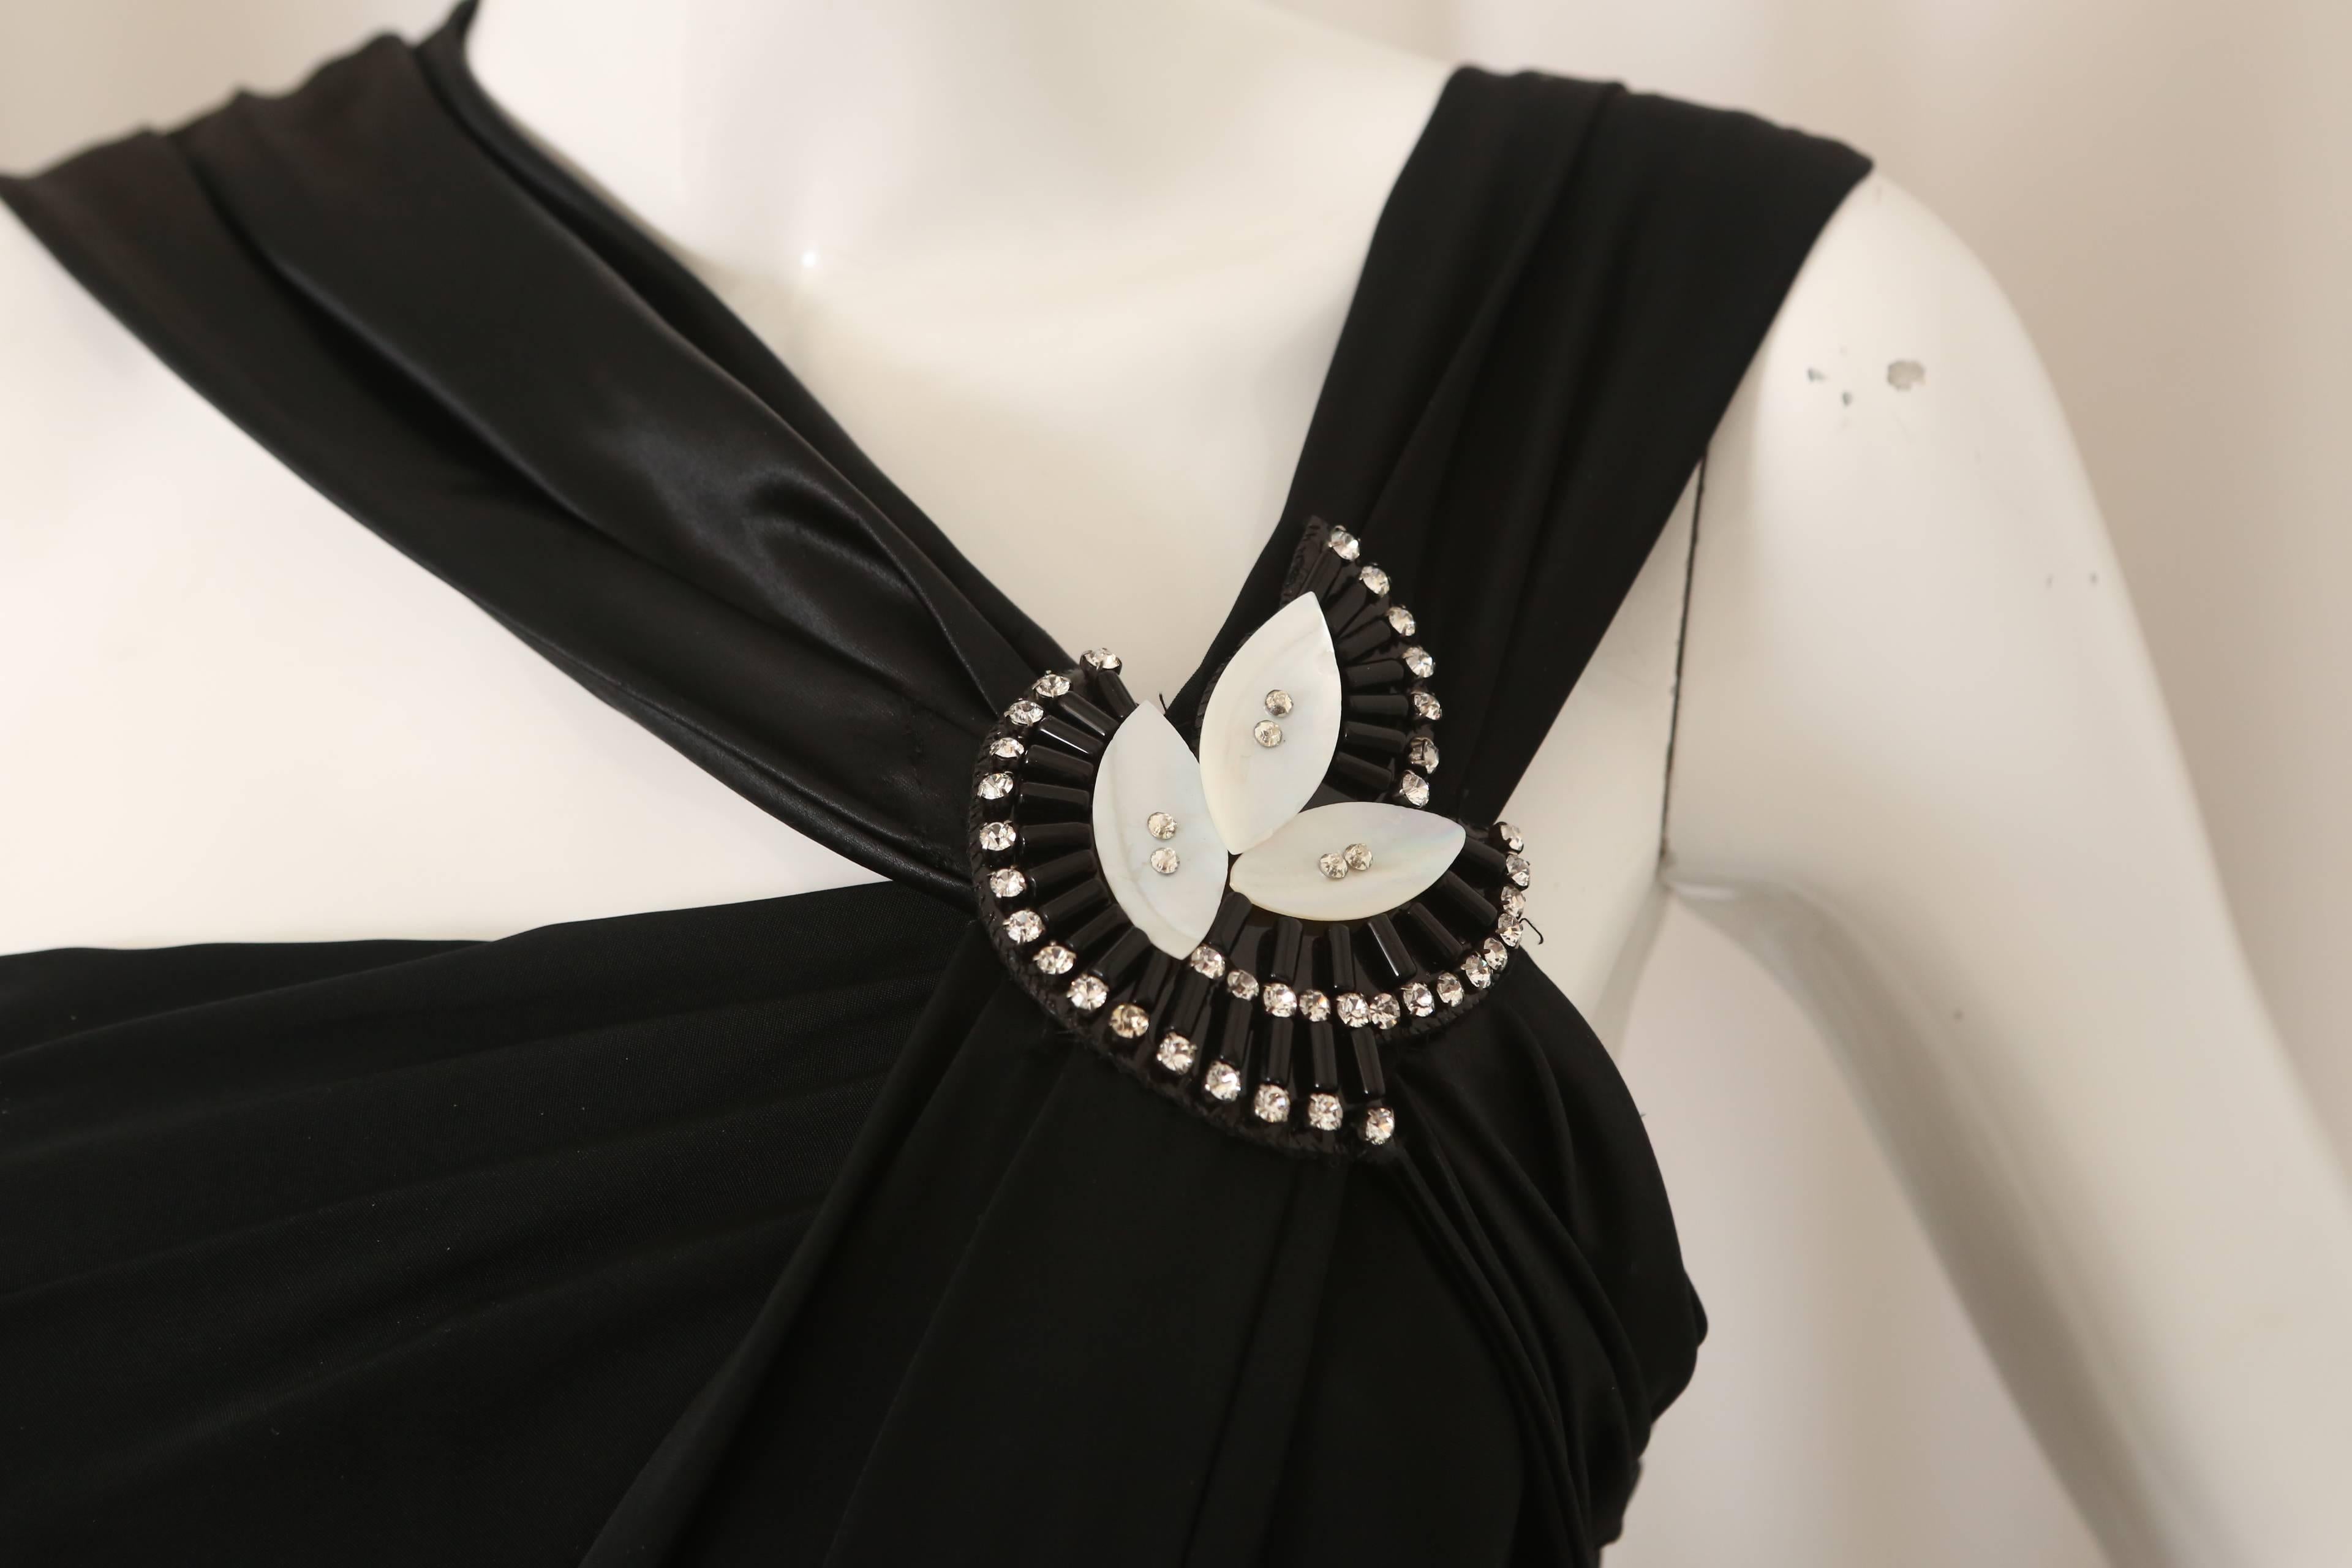 Gucci black cocktail dress w/ double straps on left shoulder & embellishment.  W/ patent leather tie belt at waist.  

Some damage on straps near embellishment.